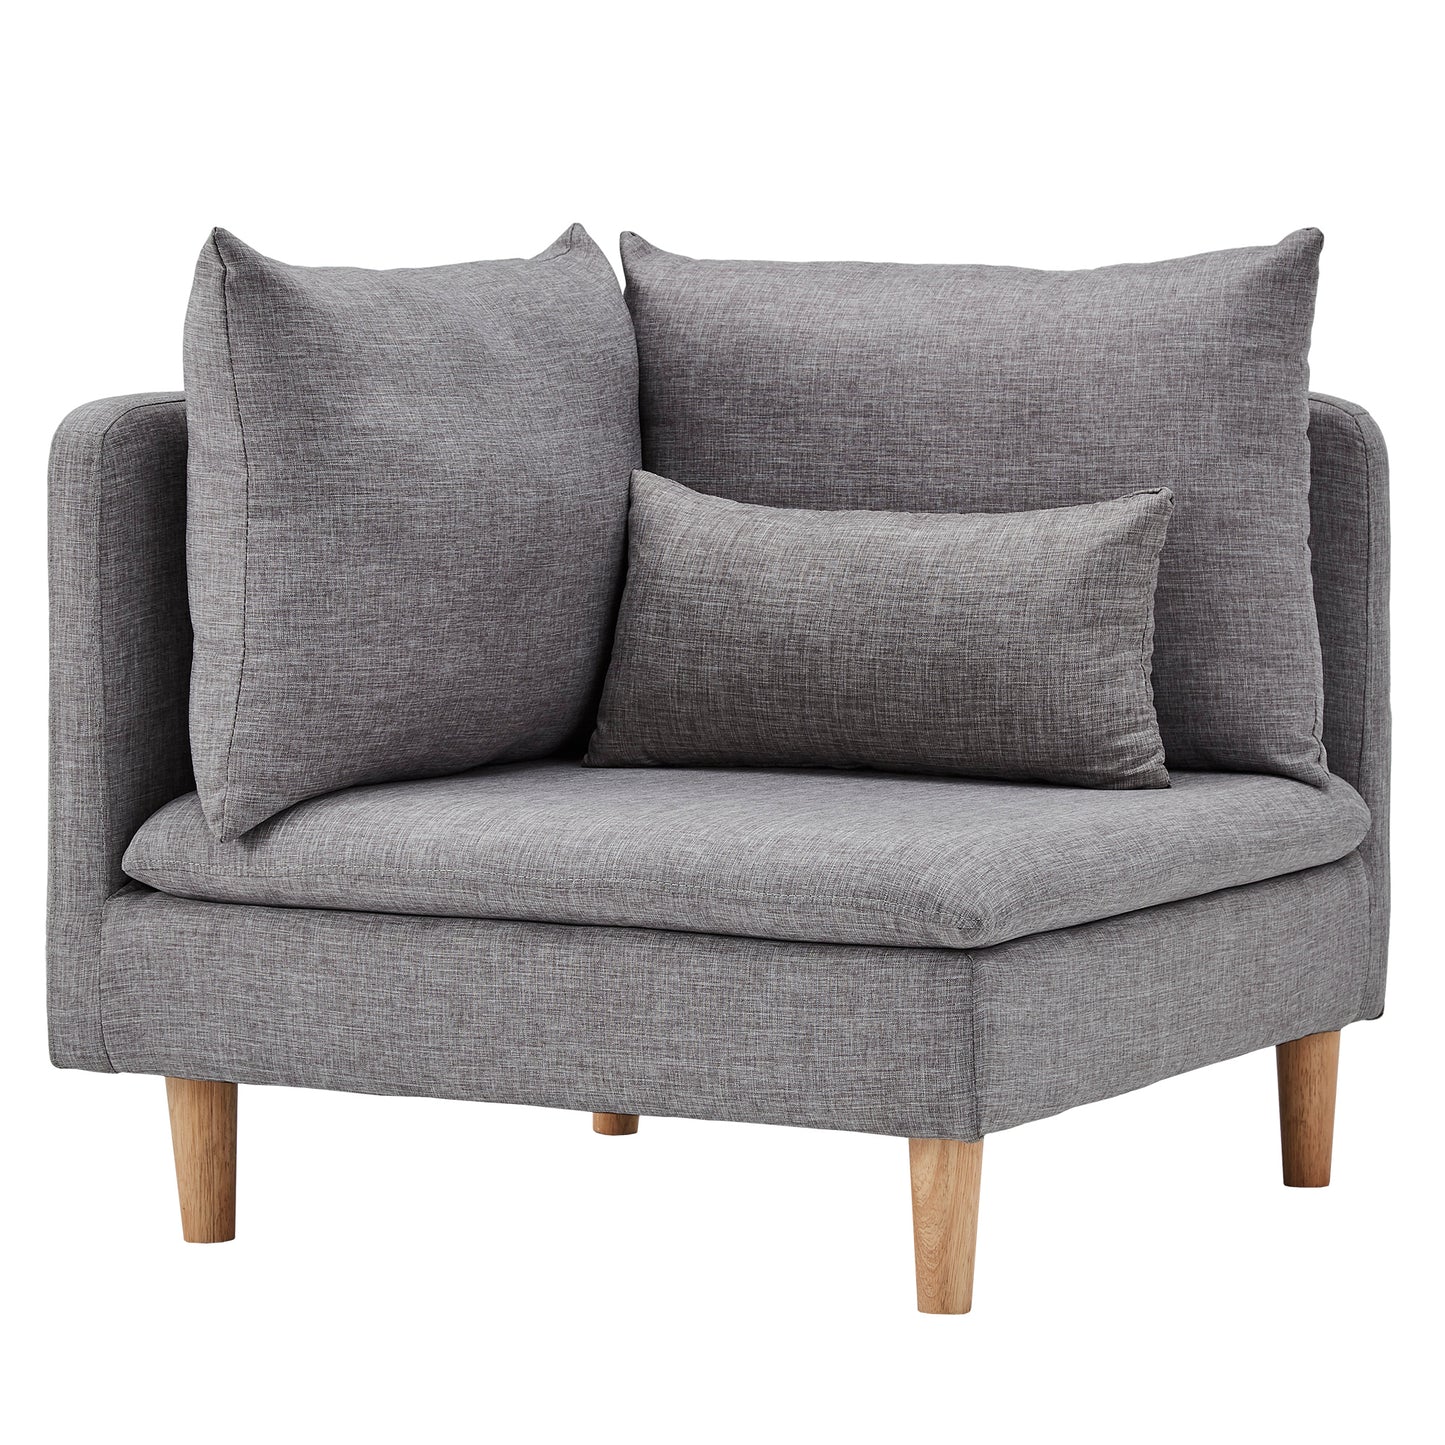 Modular Mid-Century Living Room Seating - Grey Linen, Corner Chair